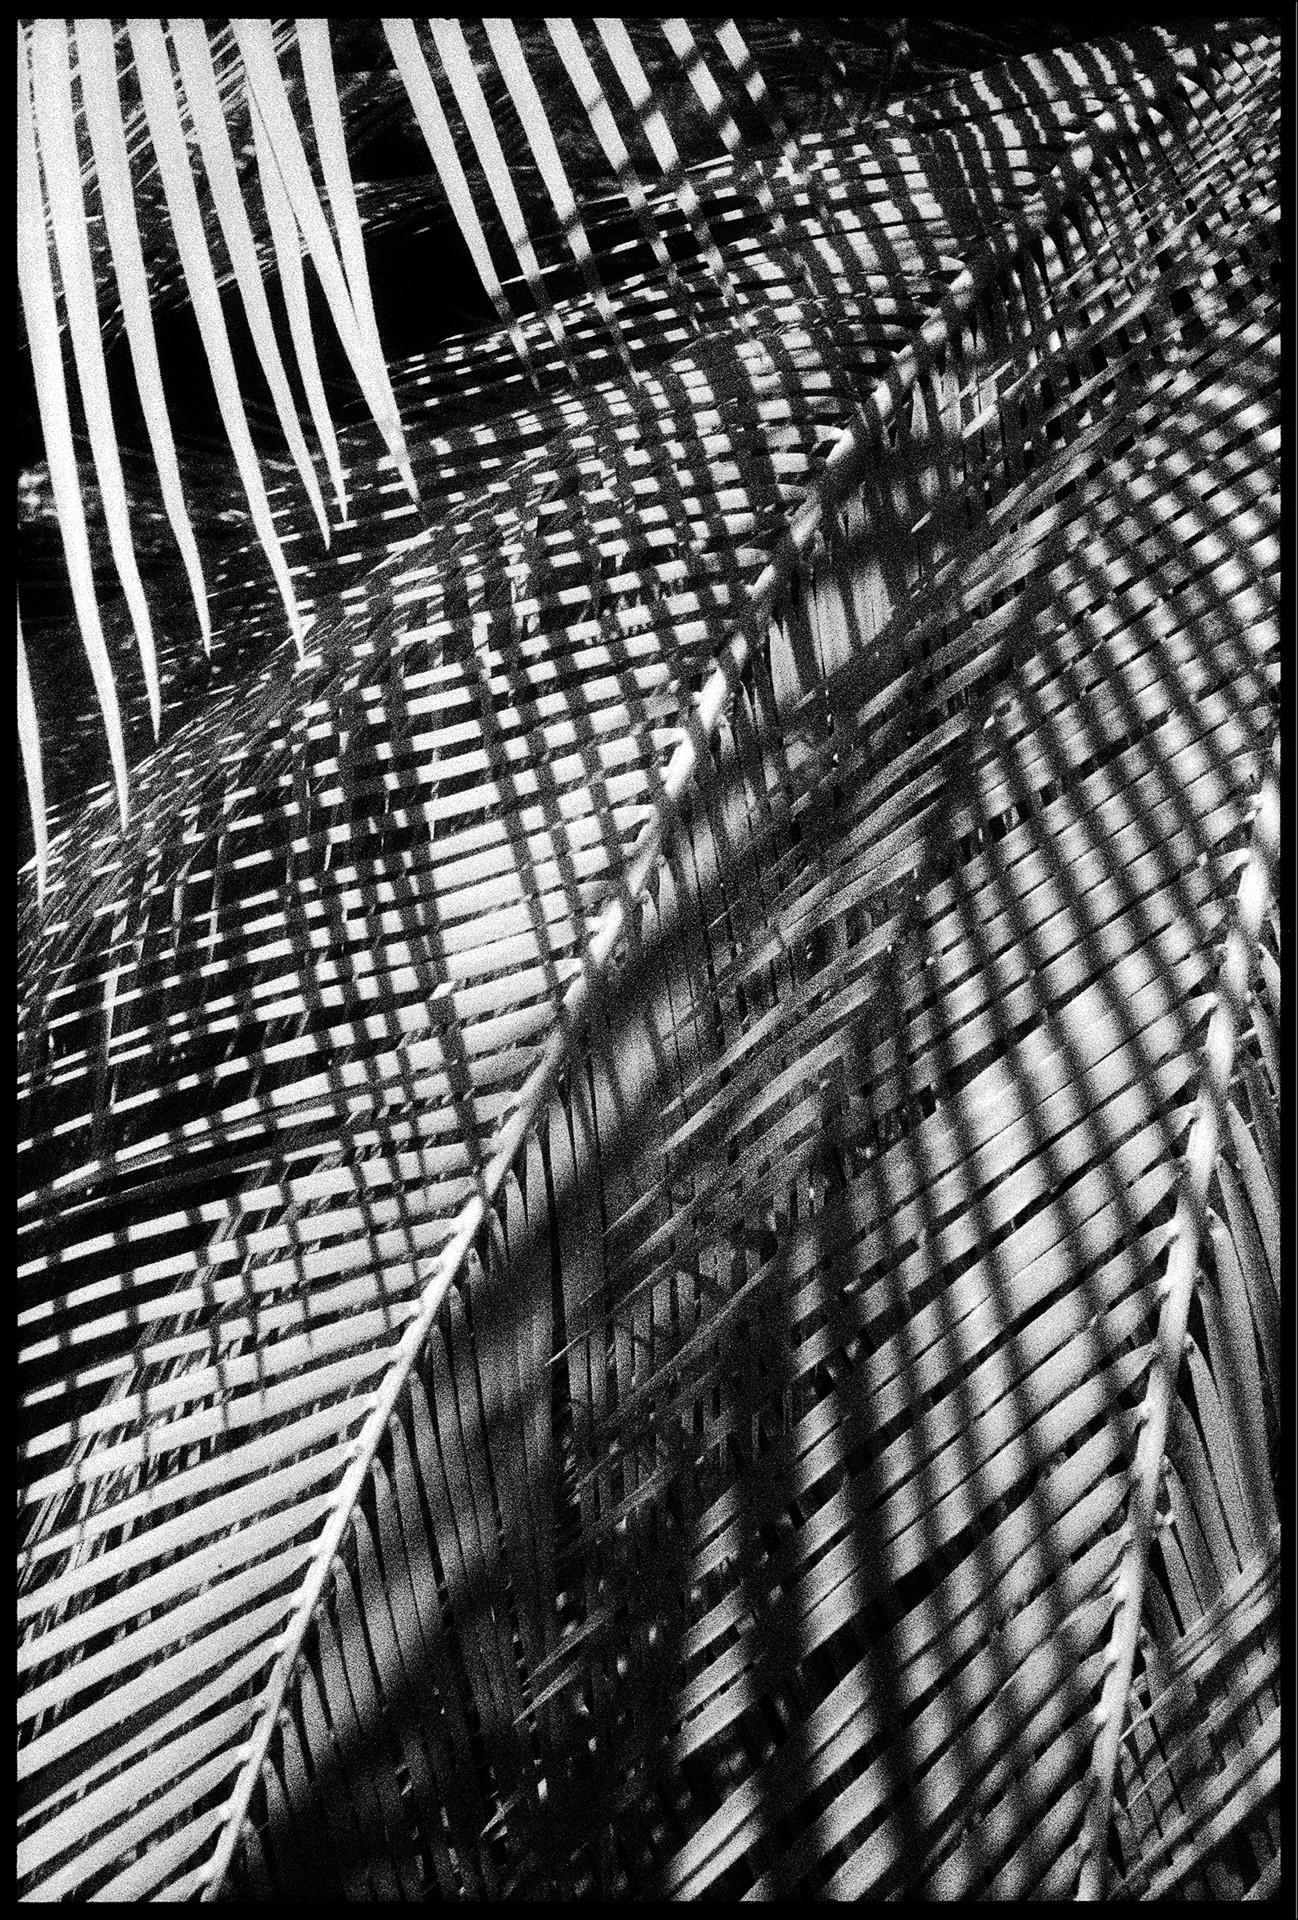 Edward Alfano Black and White Photograph - Huntington Gardens LIX, San Marino, CA - Contemporary Pigment Print on Aluminum